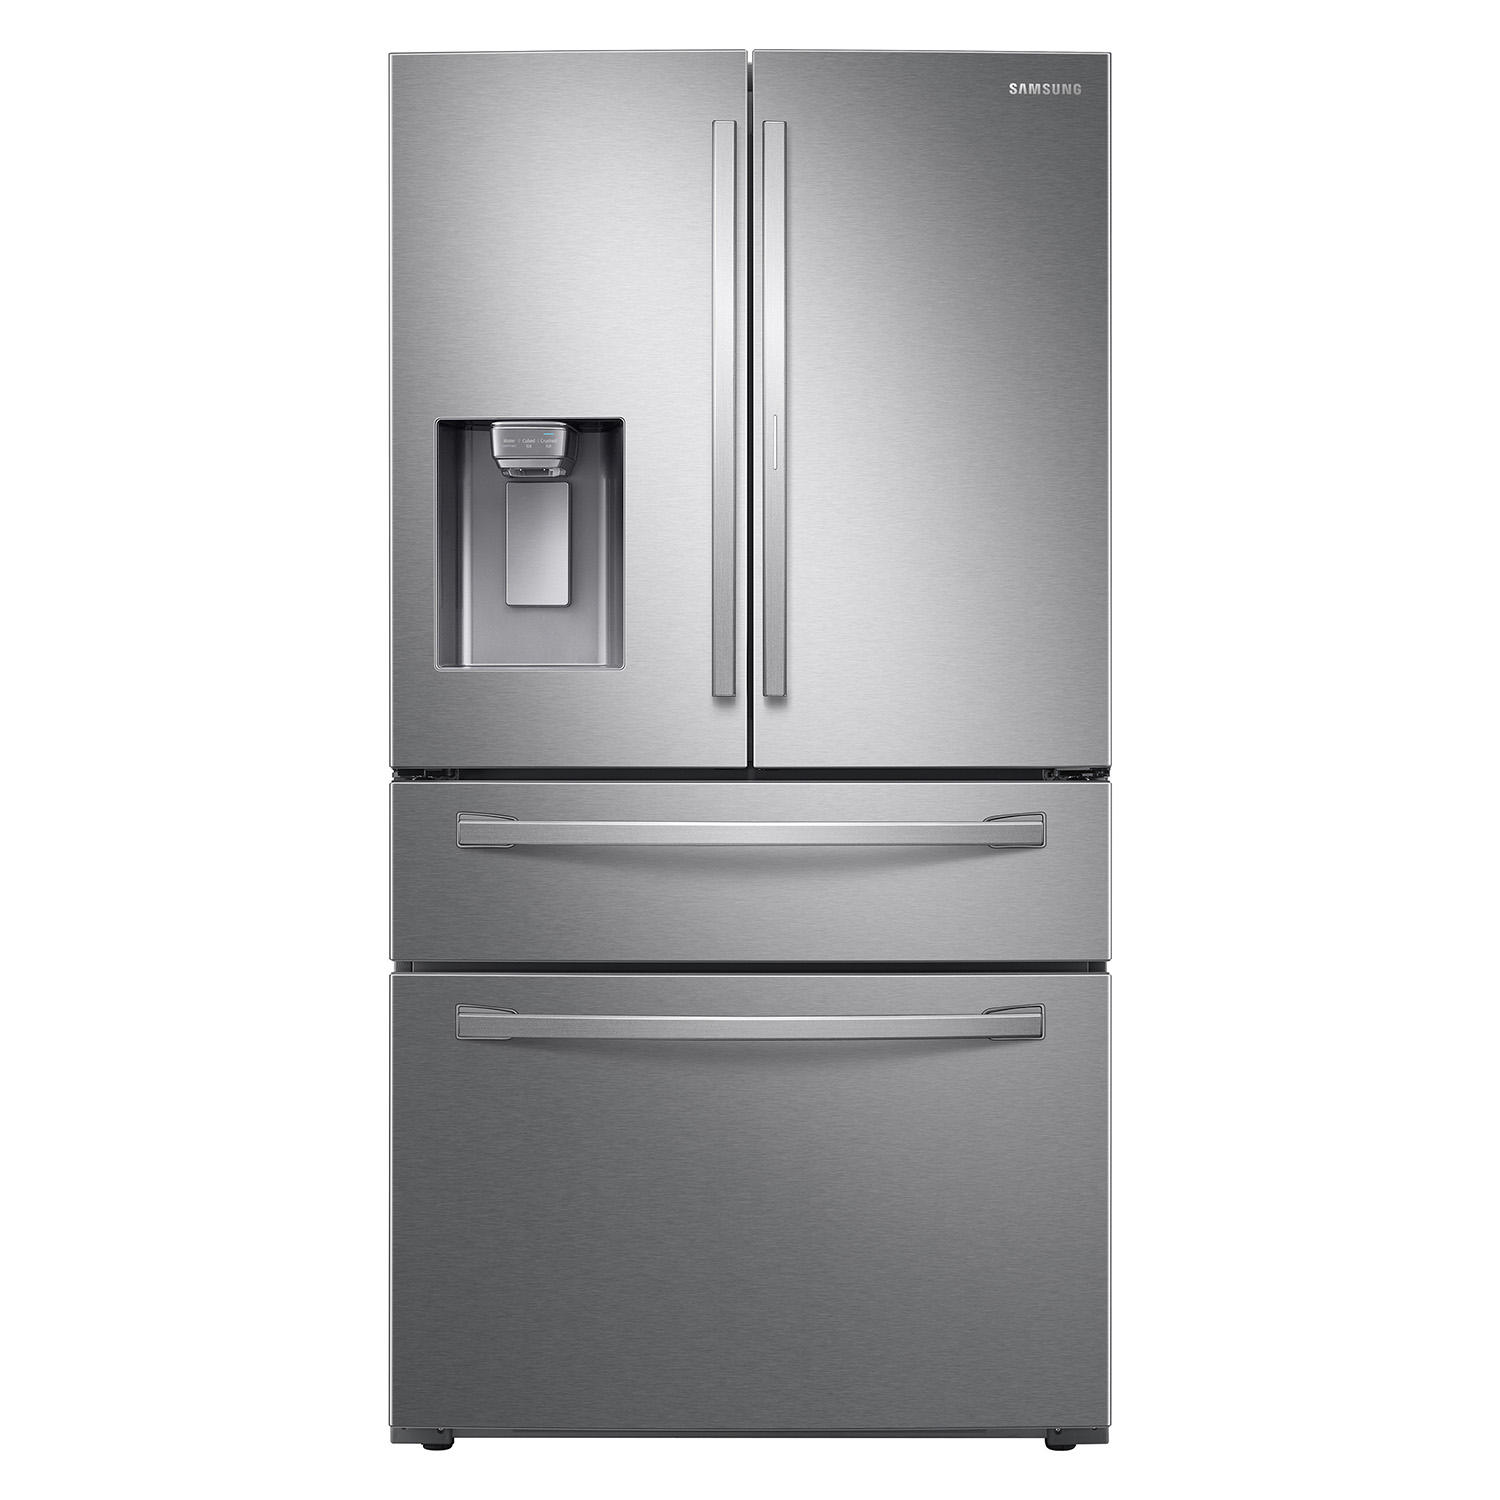 Samsung RF22R7351SG 22 cu. ft. French Door Counter Depth Refrigerator with Food Showcase